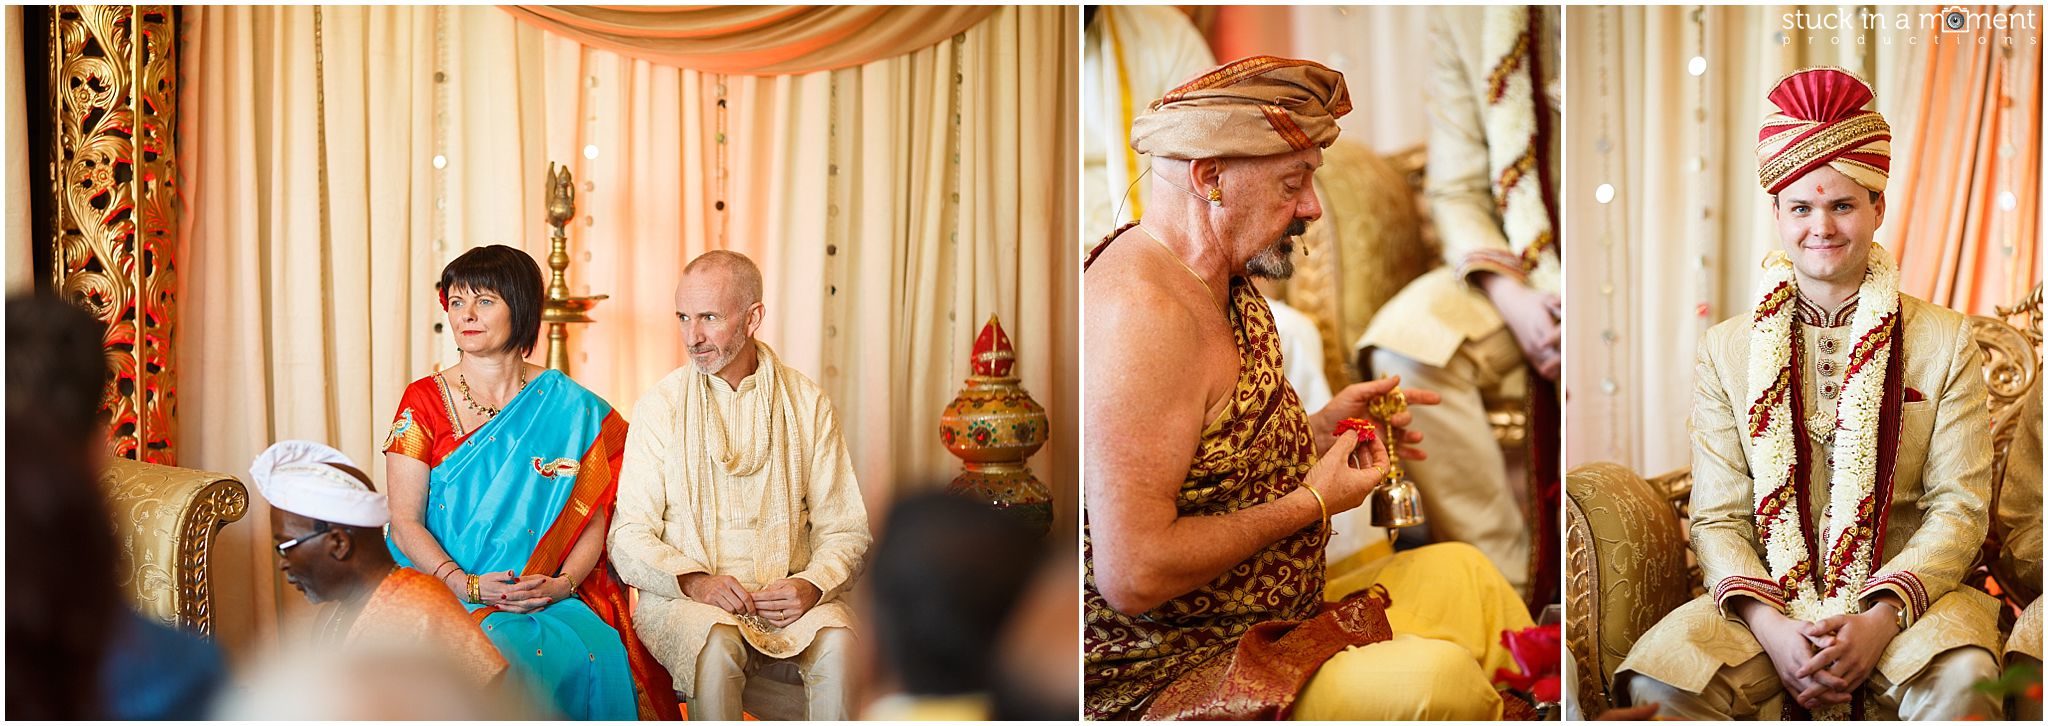 srilankan wedding photographer sydney